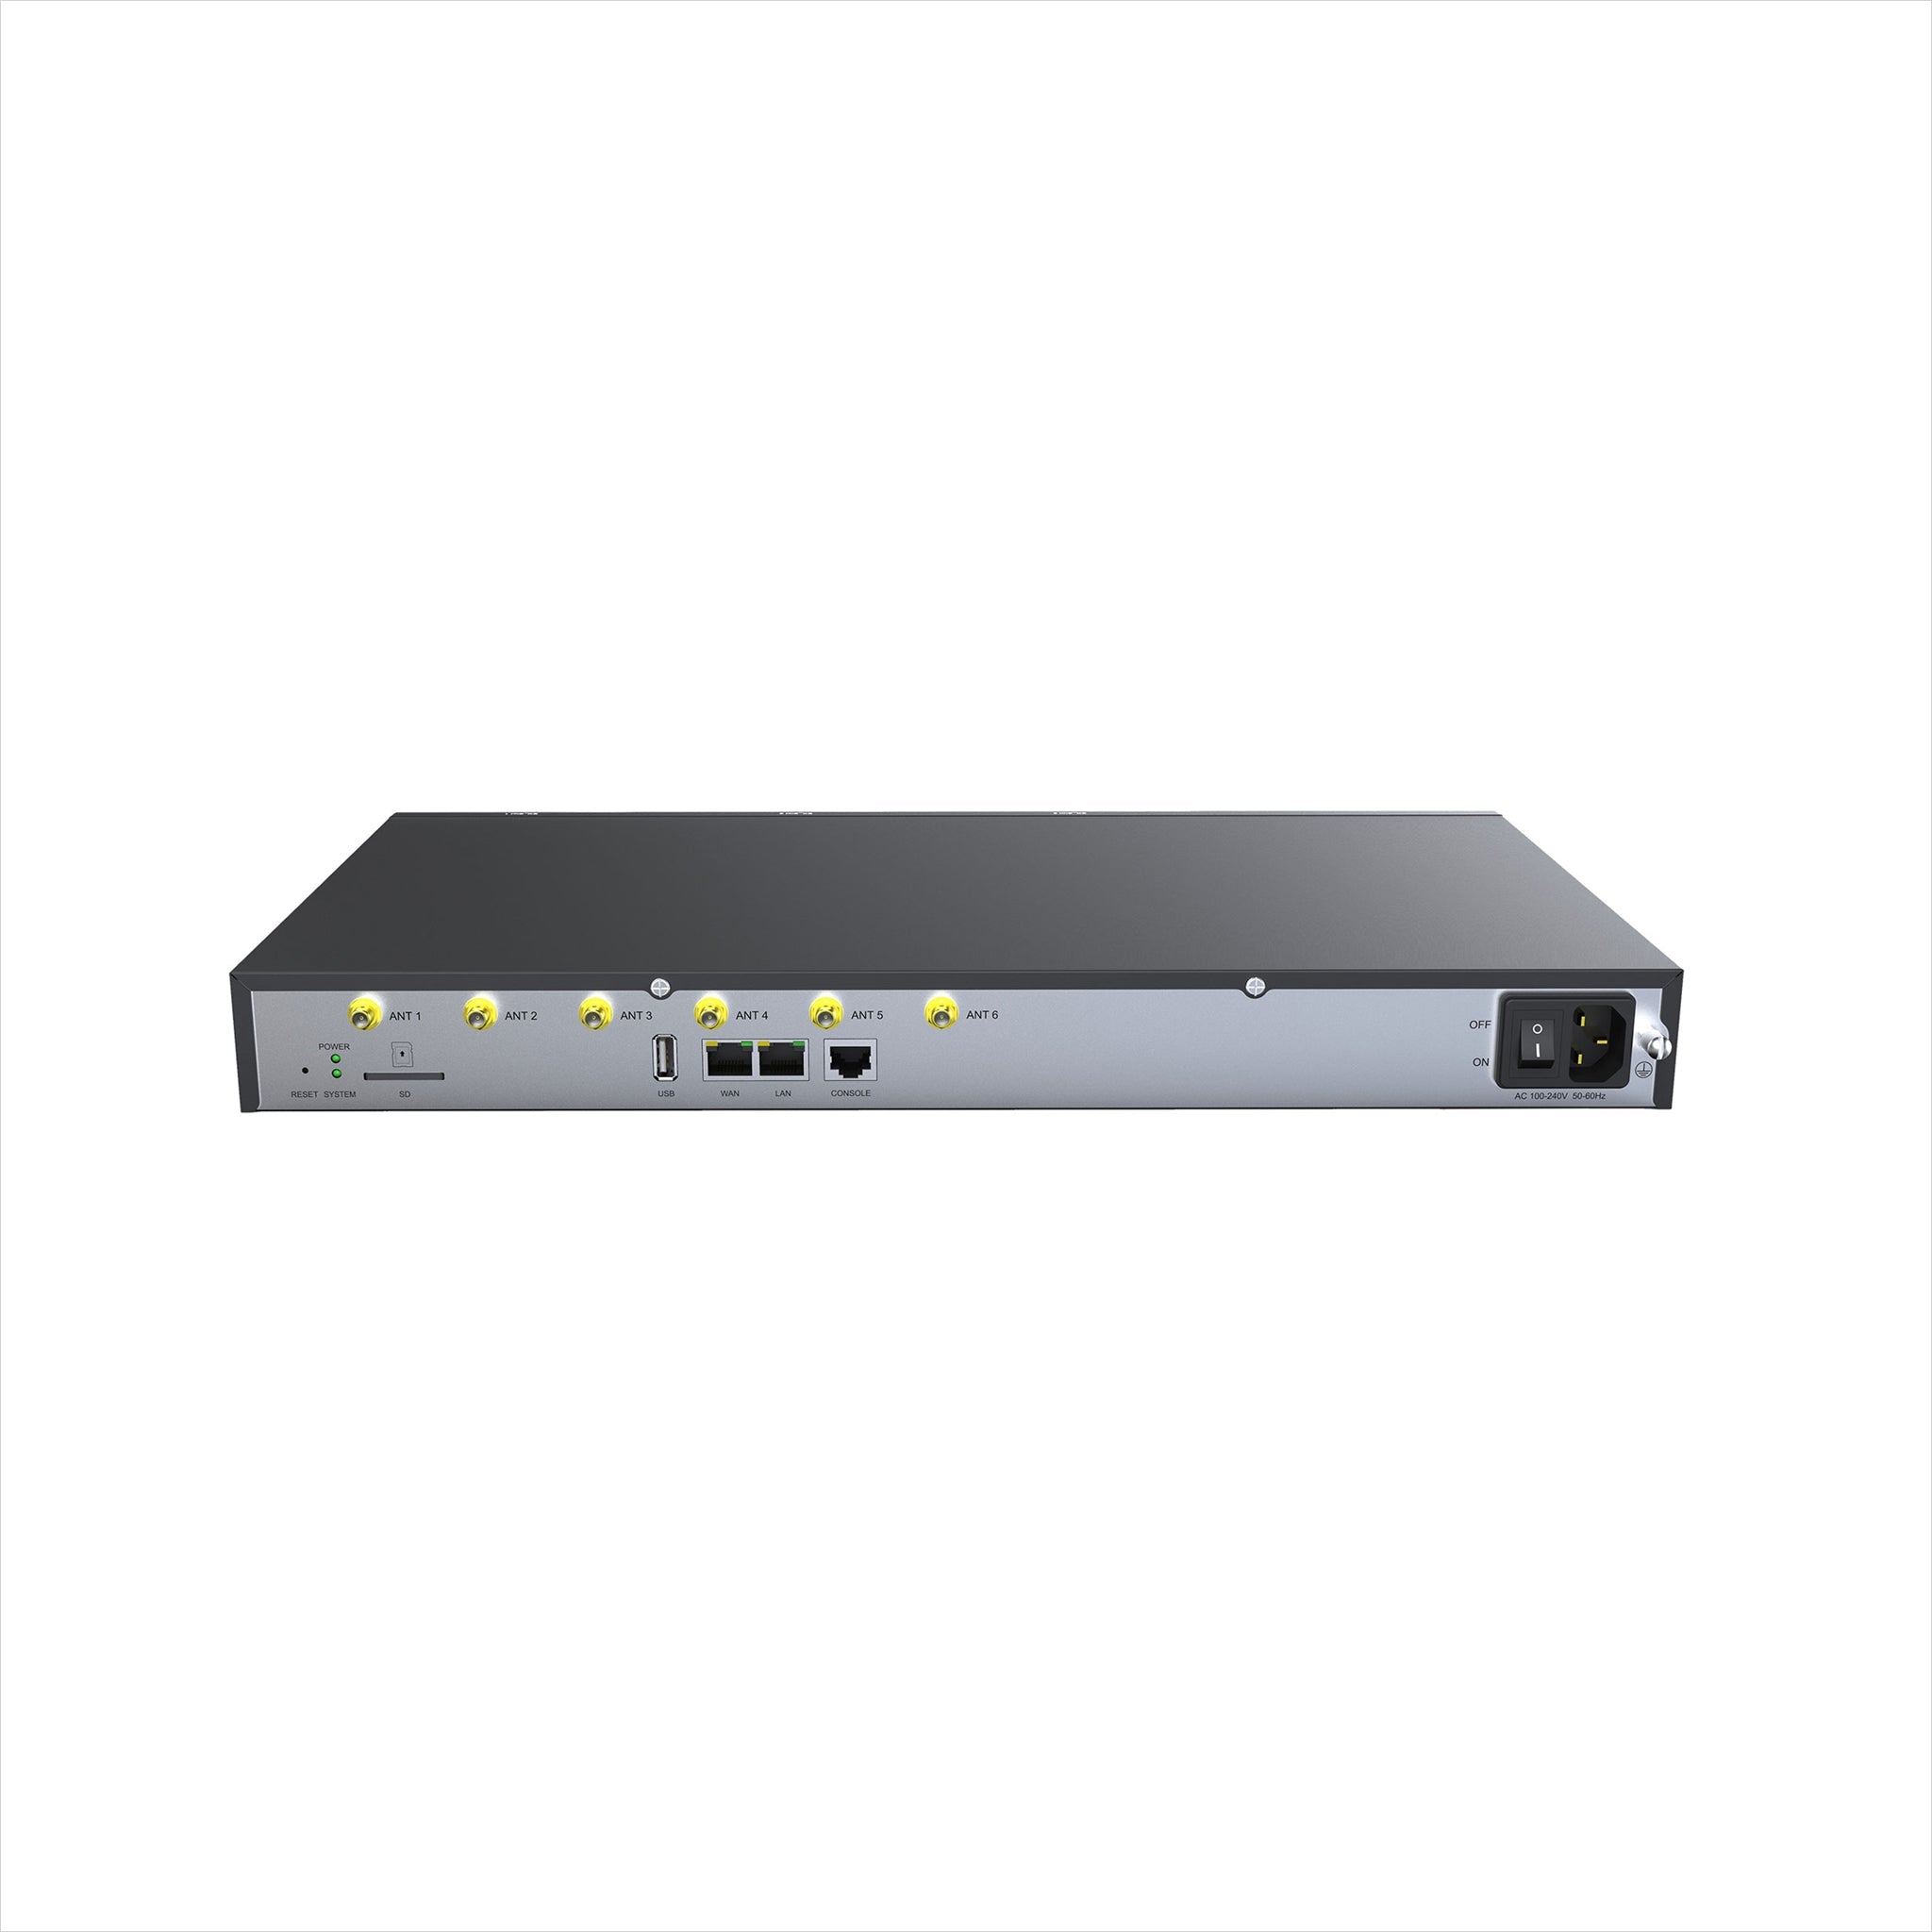 Yeastar S300 VoIP PBX - IP PBX S300 Phone System, 500 Users | AL-VoIP Store 